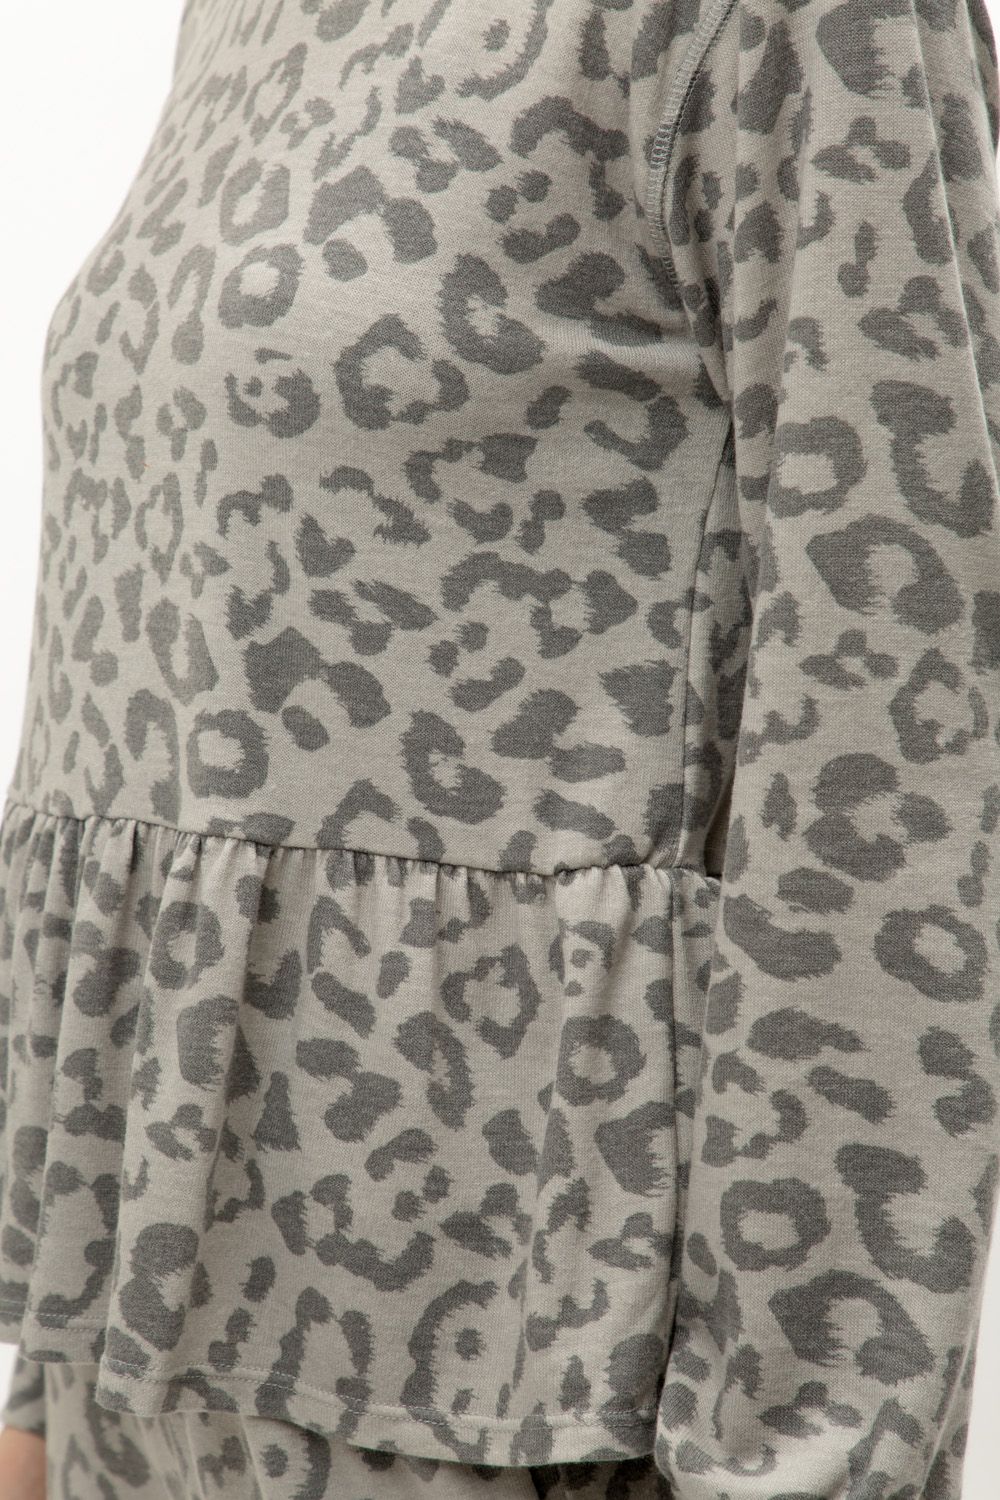 Peplum Pullover - Leopard